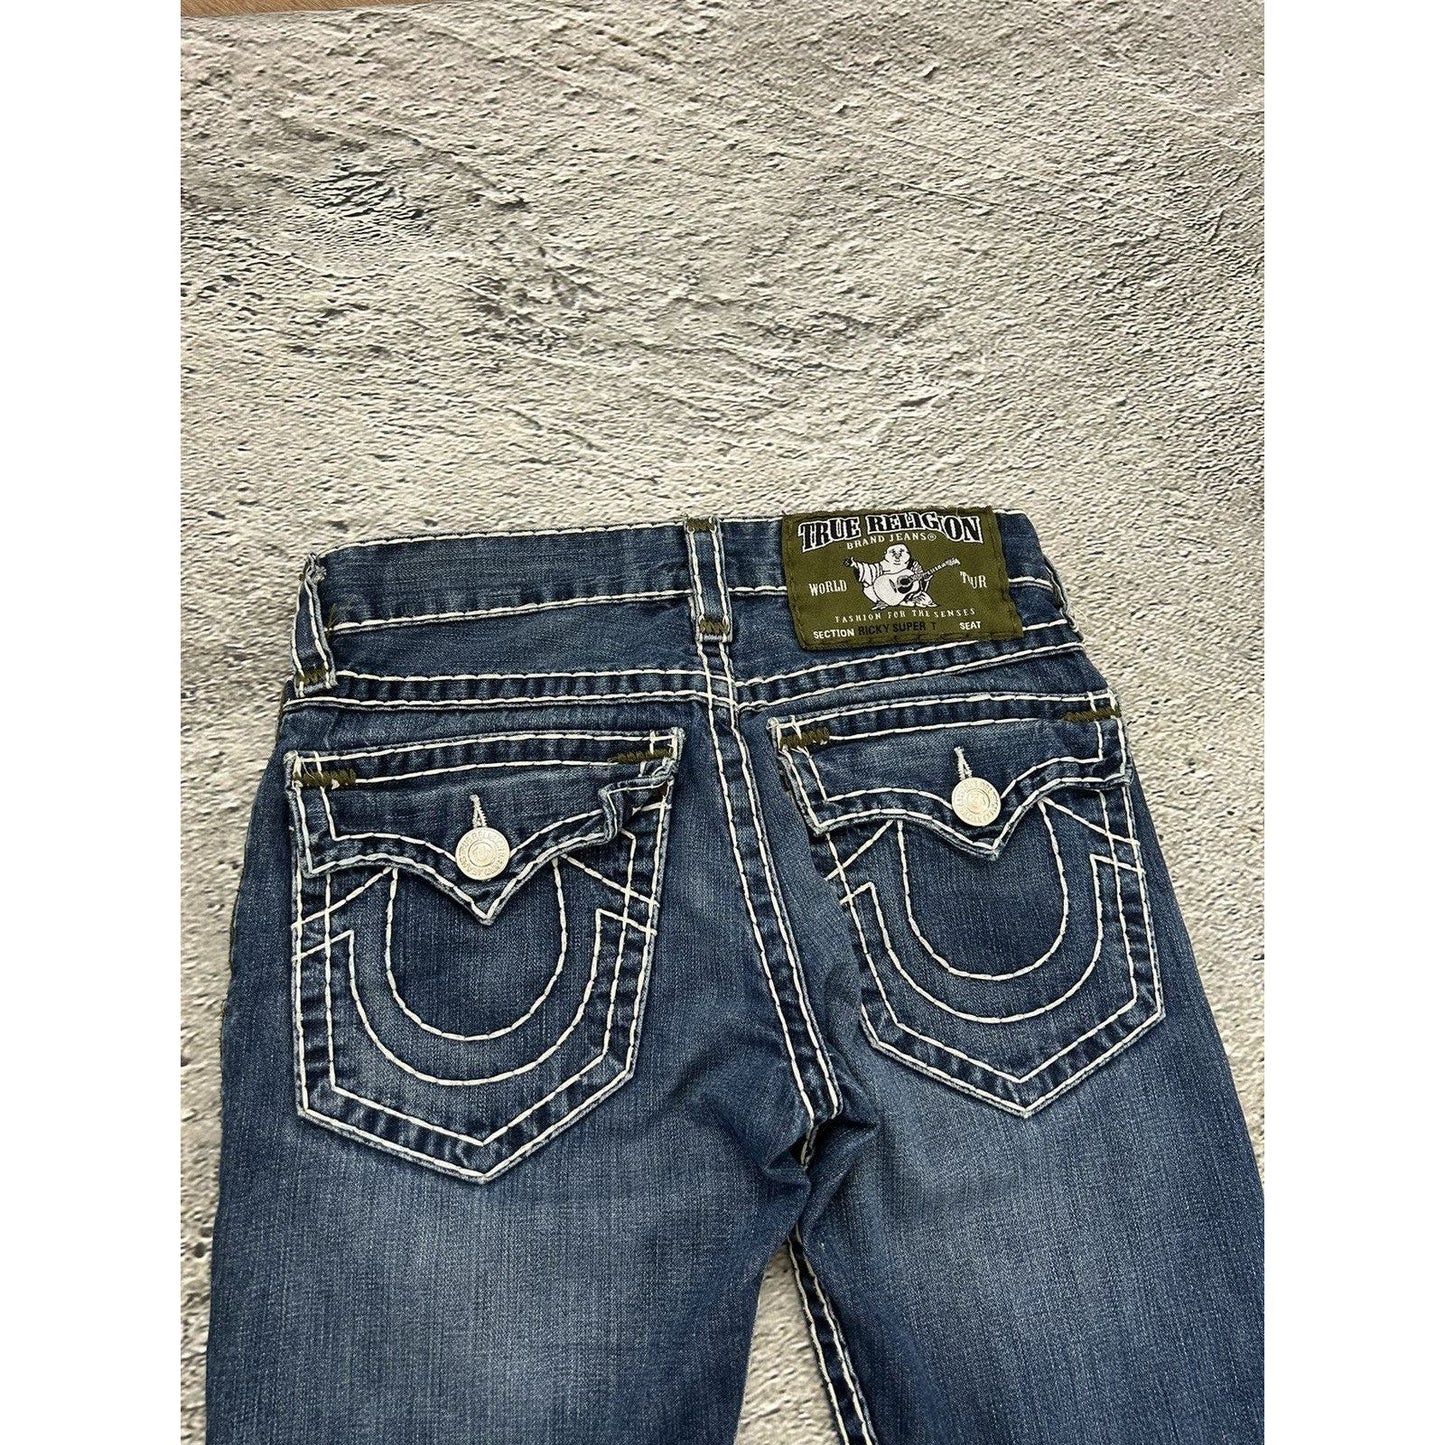 True Religion blue jeans white thick stitching Y2K khaki